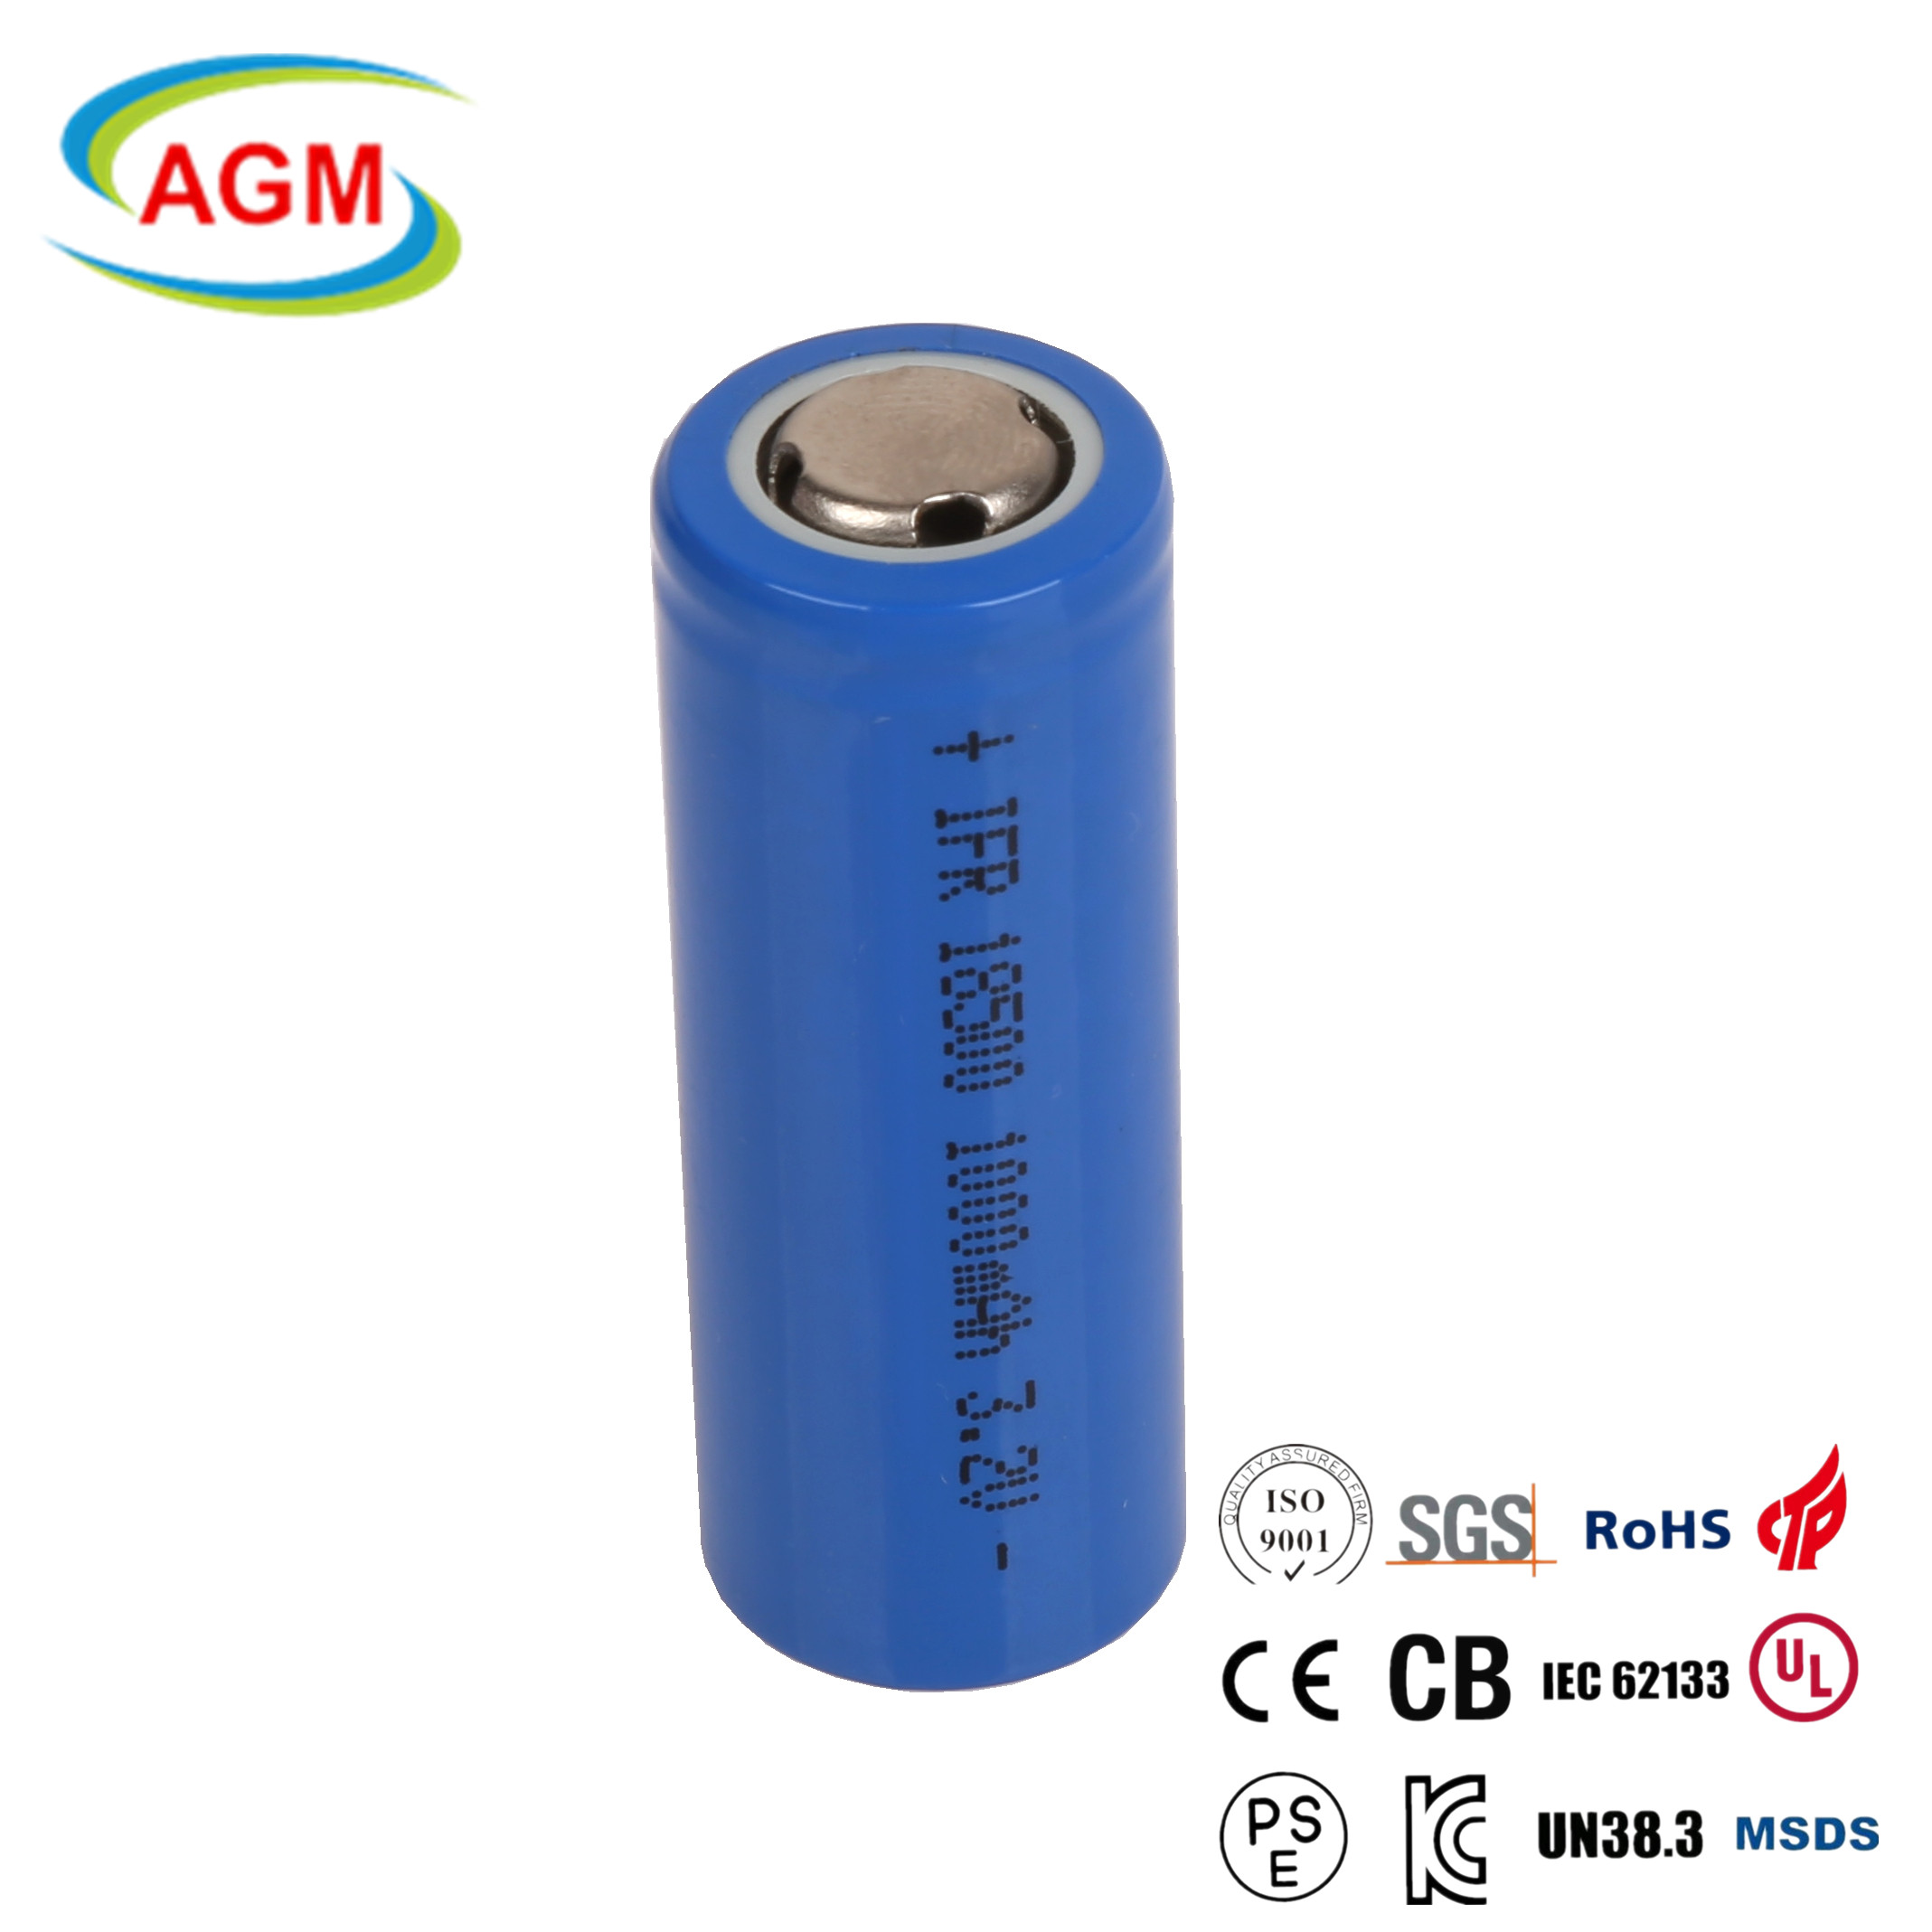 IFR 18500 1000mAh 3.2V lithium battery lifepo4